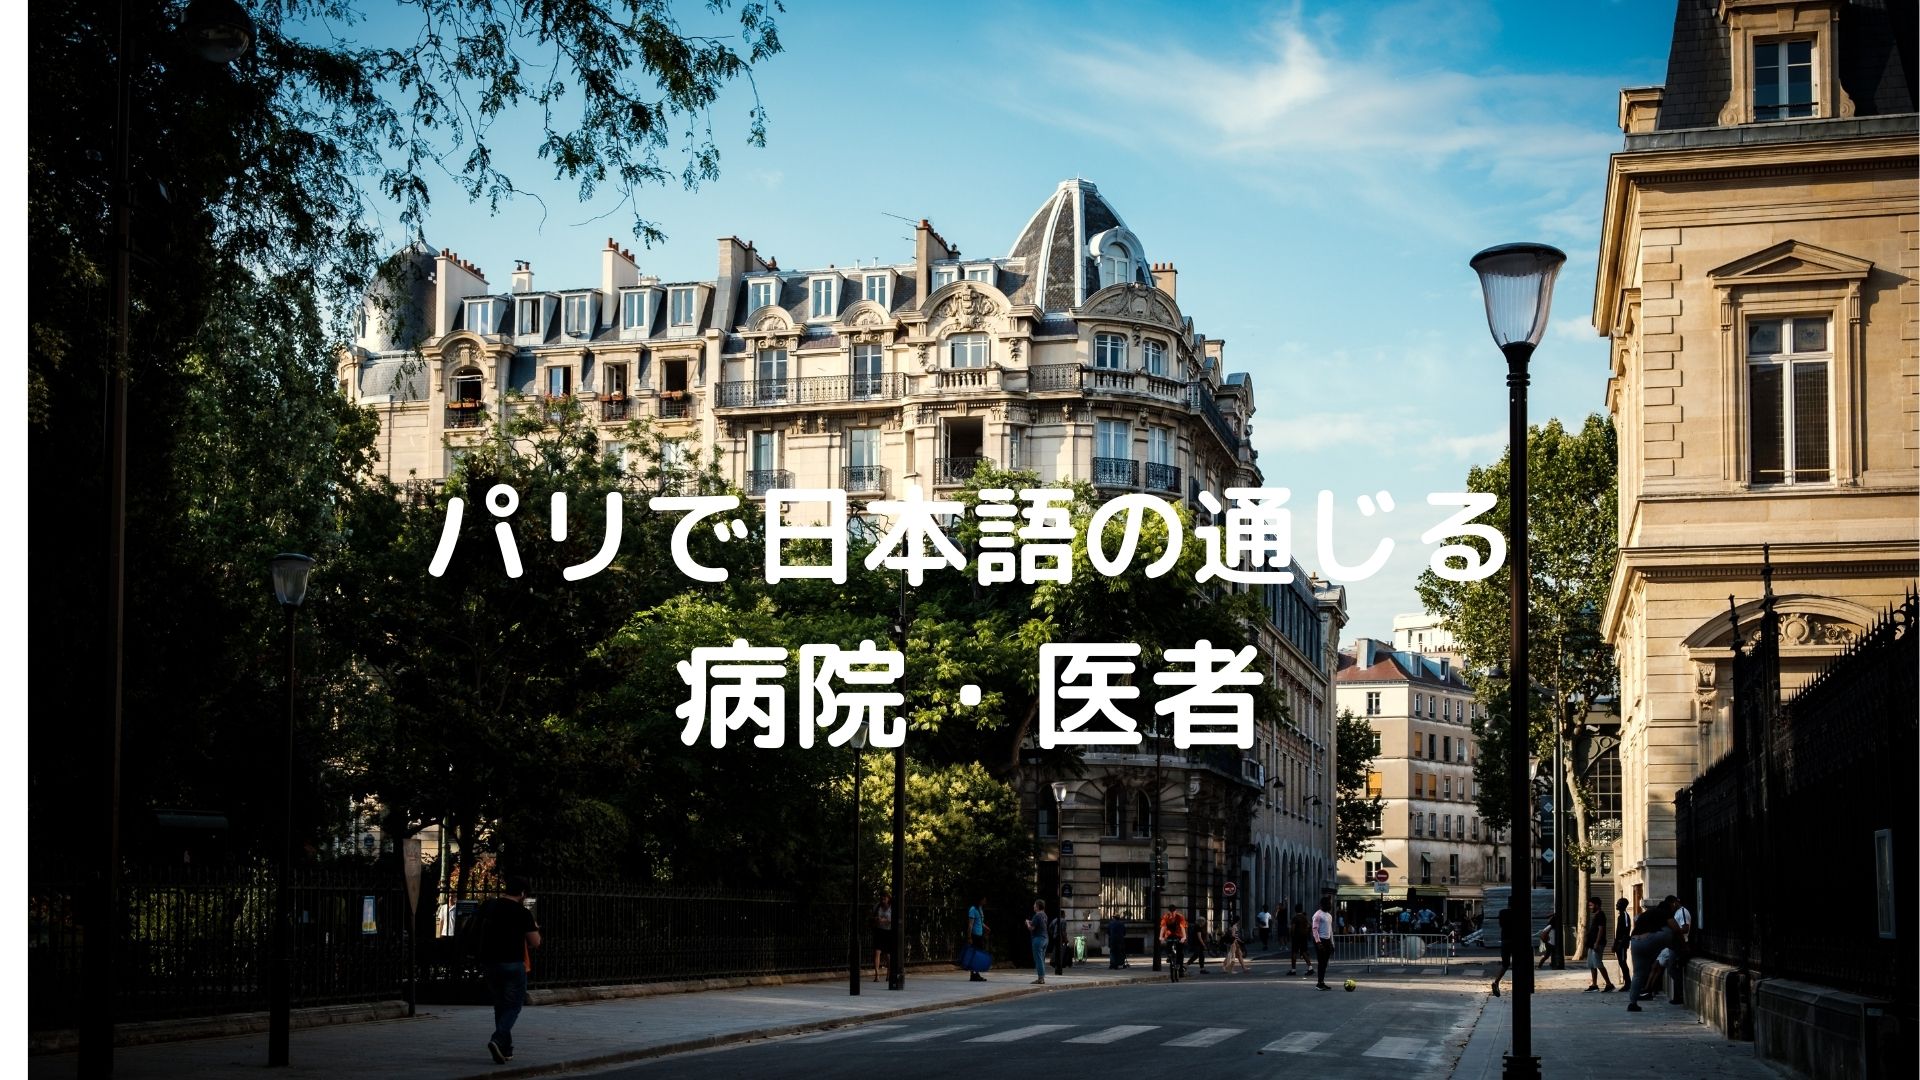 Japanese speaking doctors and hospital in Paris